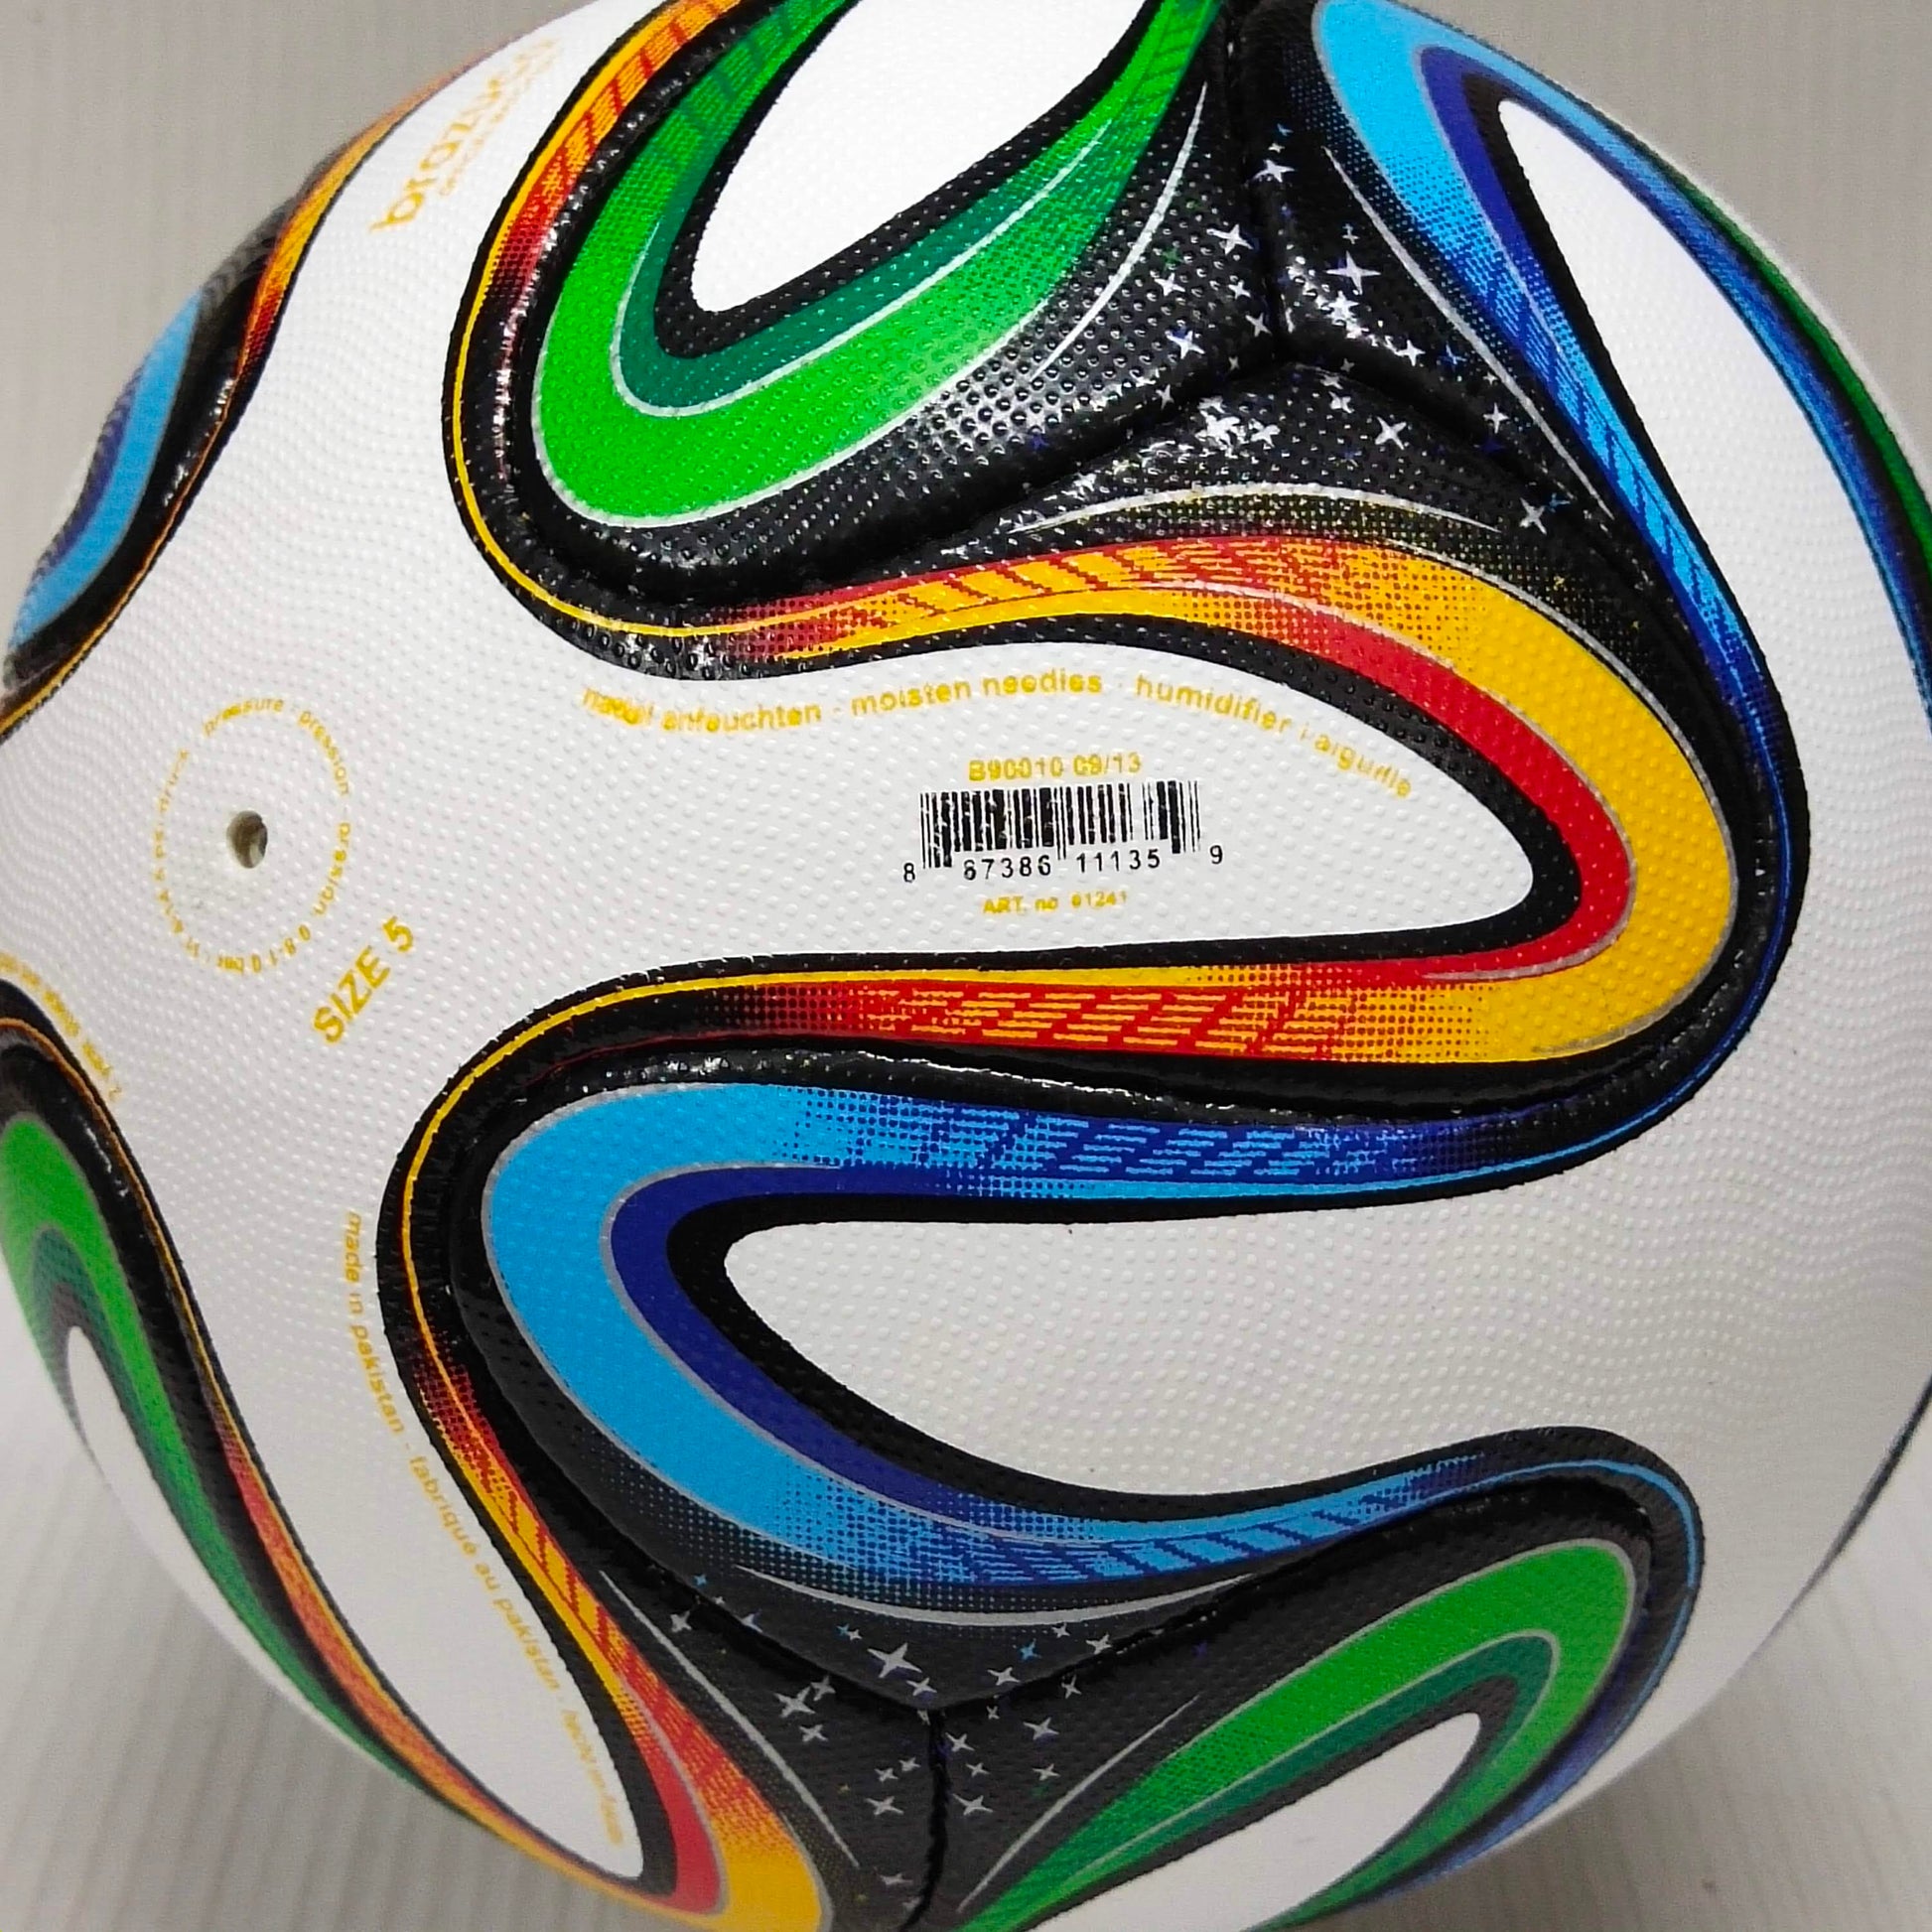 Adidas Brazuca | Match Ball | 2014 | FIFA World Cup Ball | SIZE 5 04